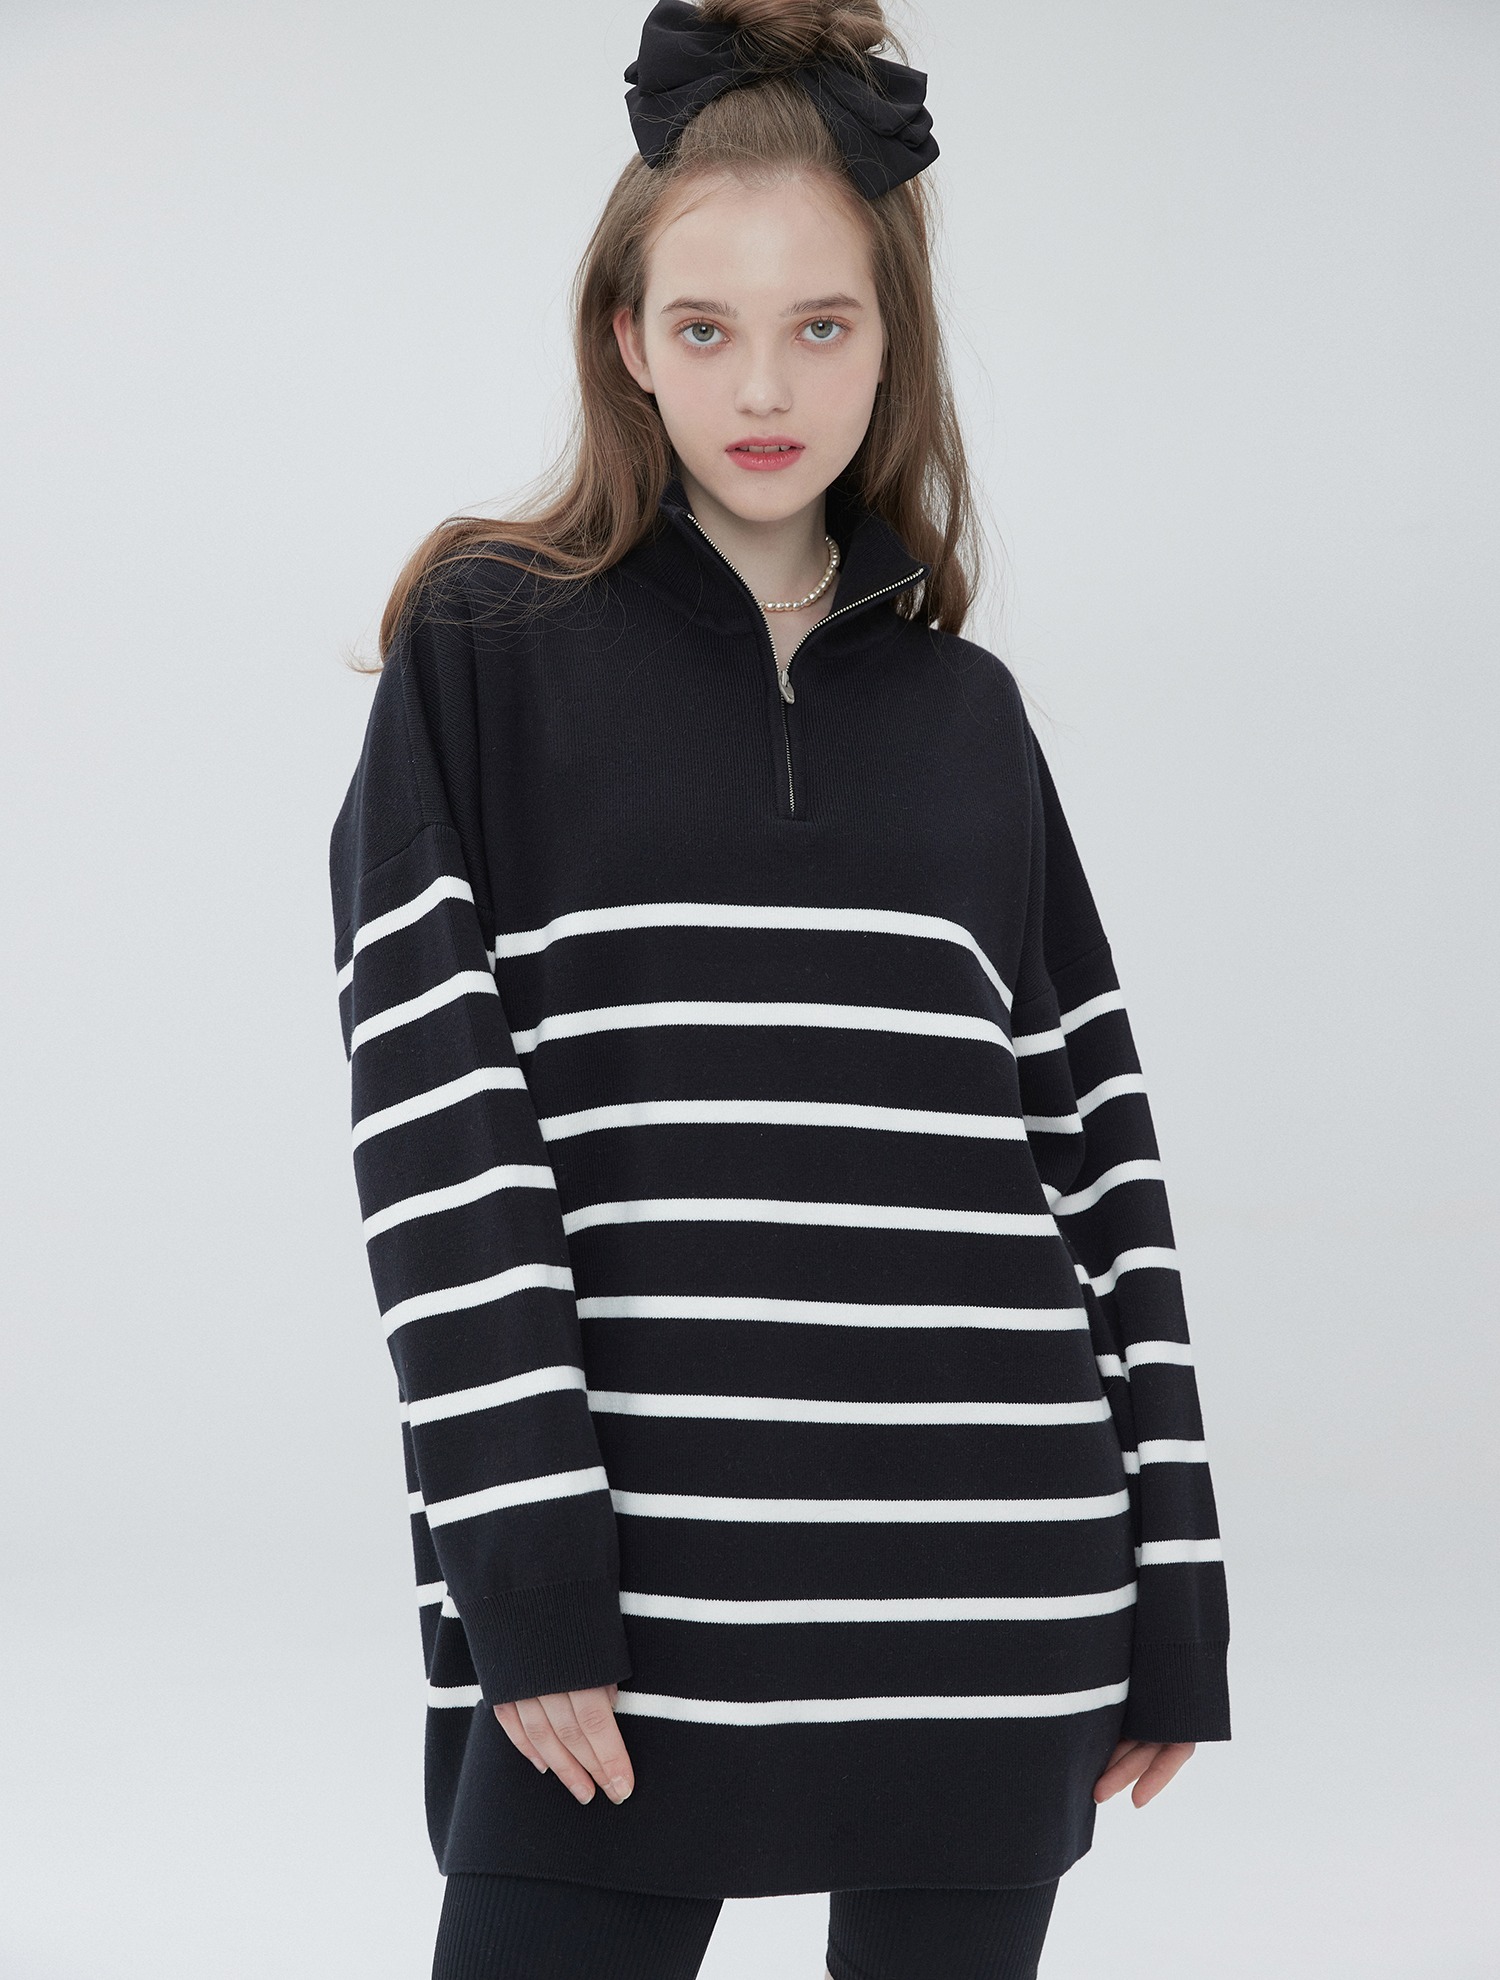 Stripe overfit zip up knit 004 Black